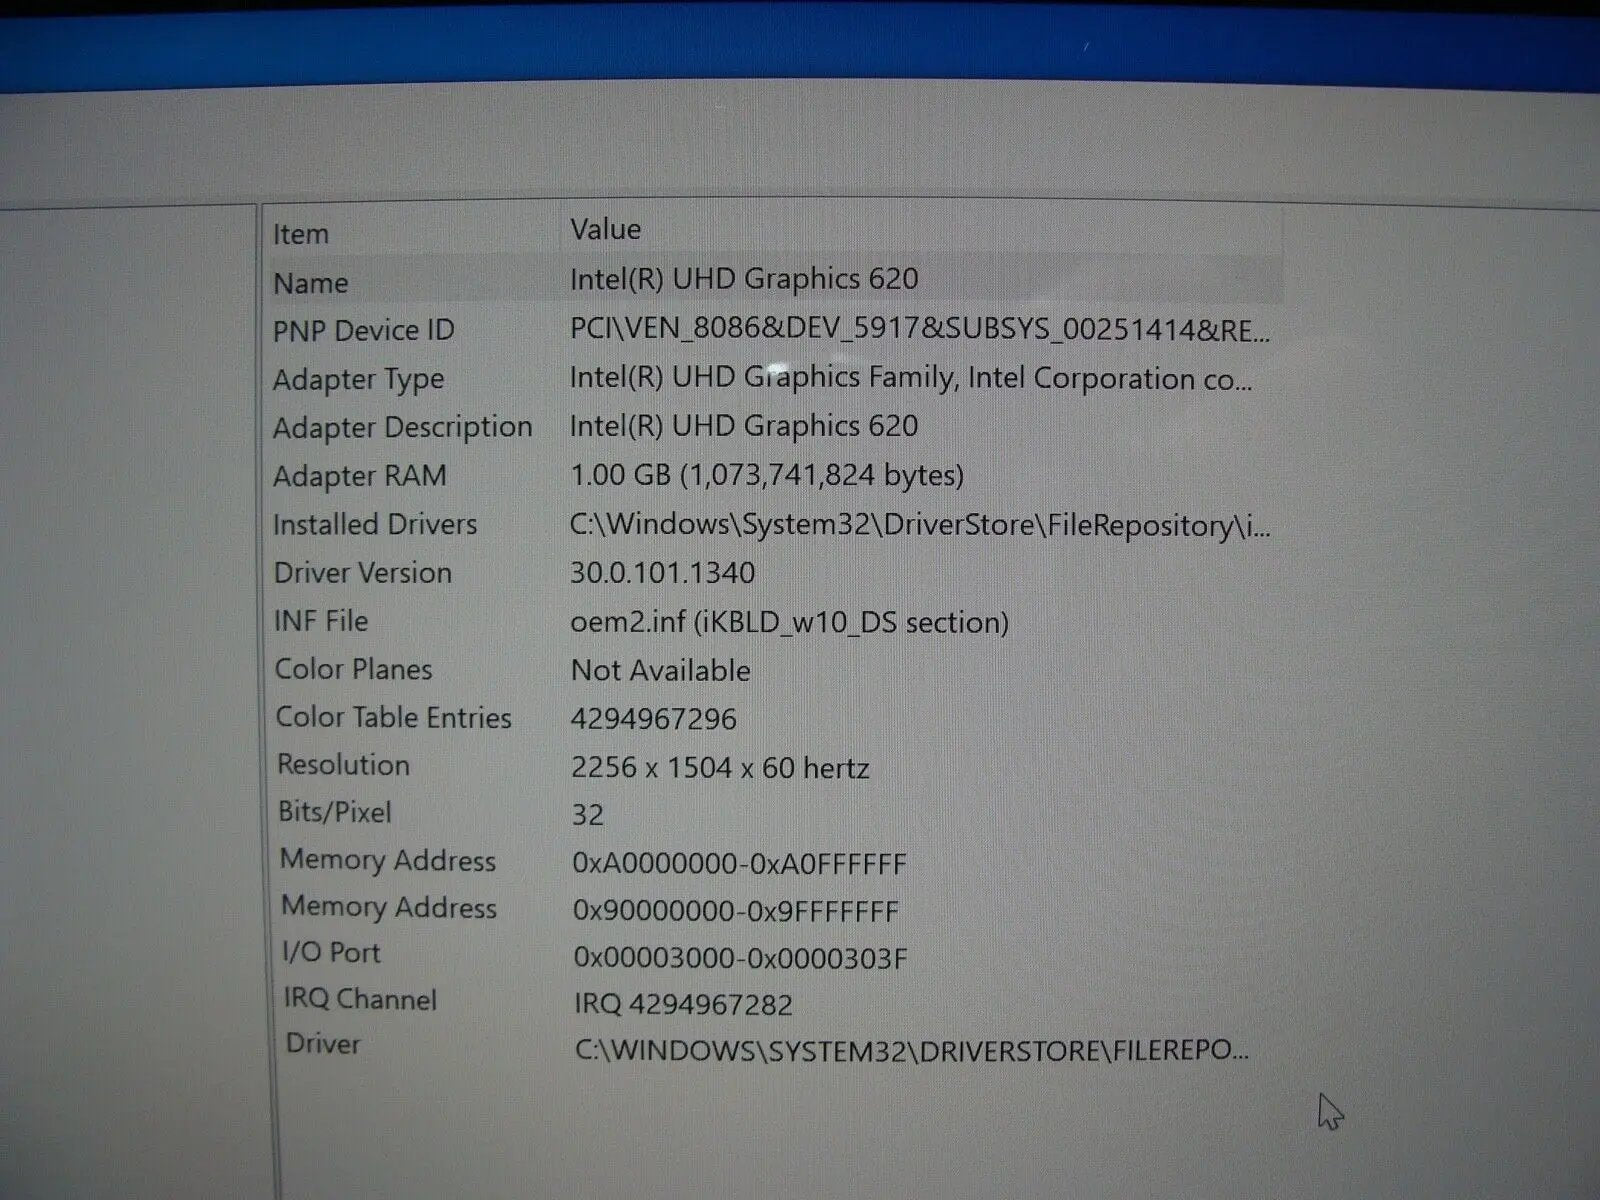 Value Deal V Good QHD MS Surface Laptop 2 1769 Intel i5-8350U 1.7Gh 8GB 128GB